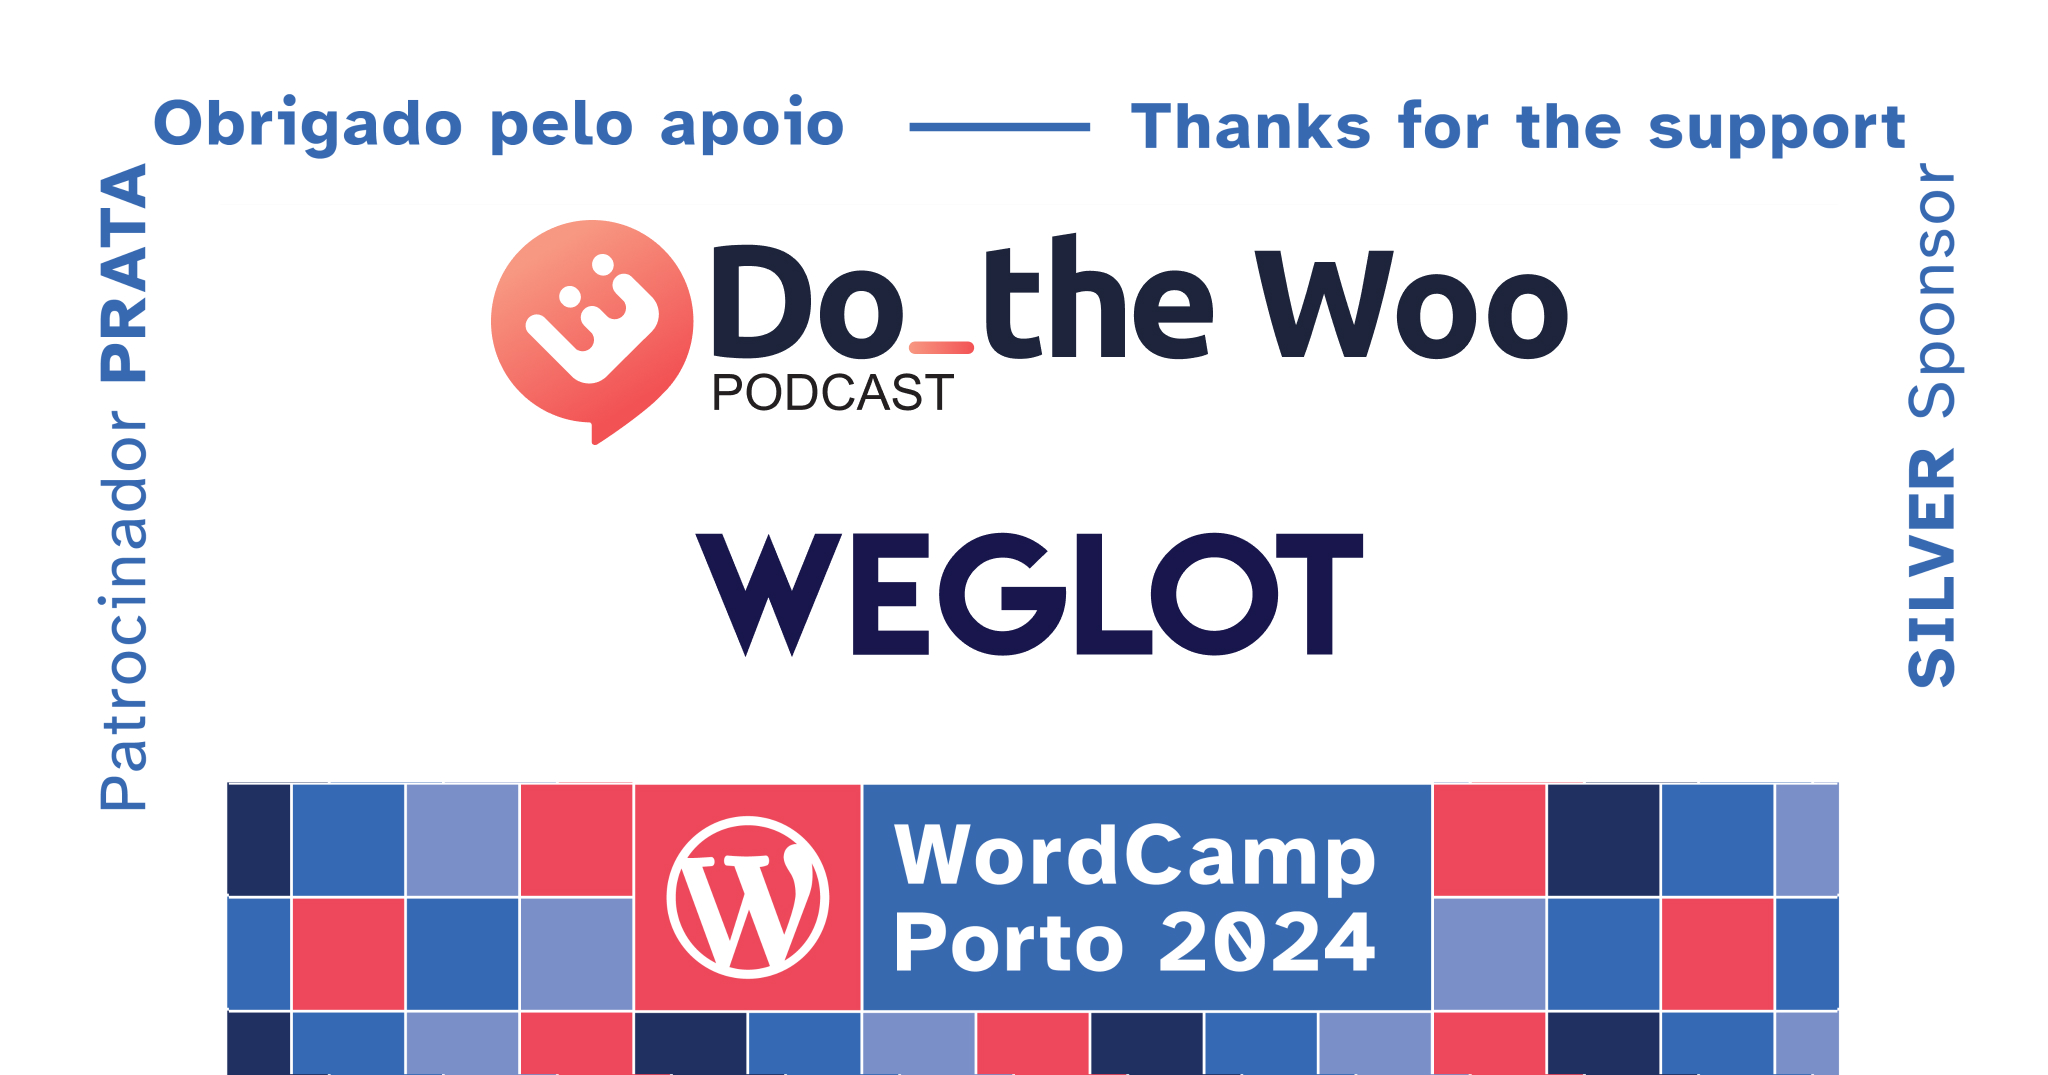 Thank you Do the Woo and Weglot